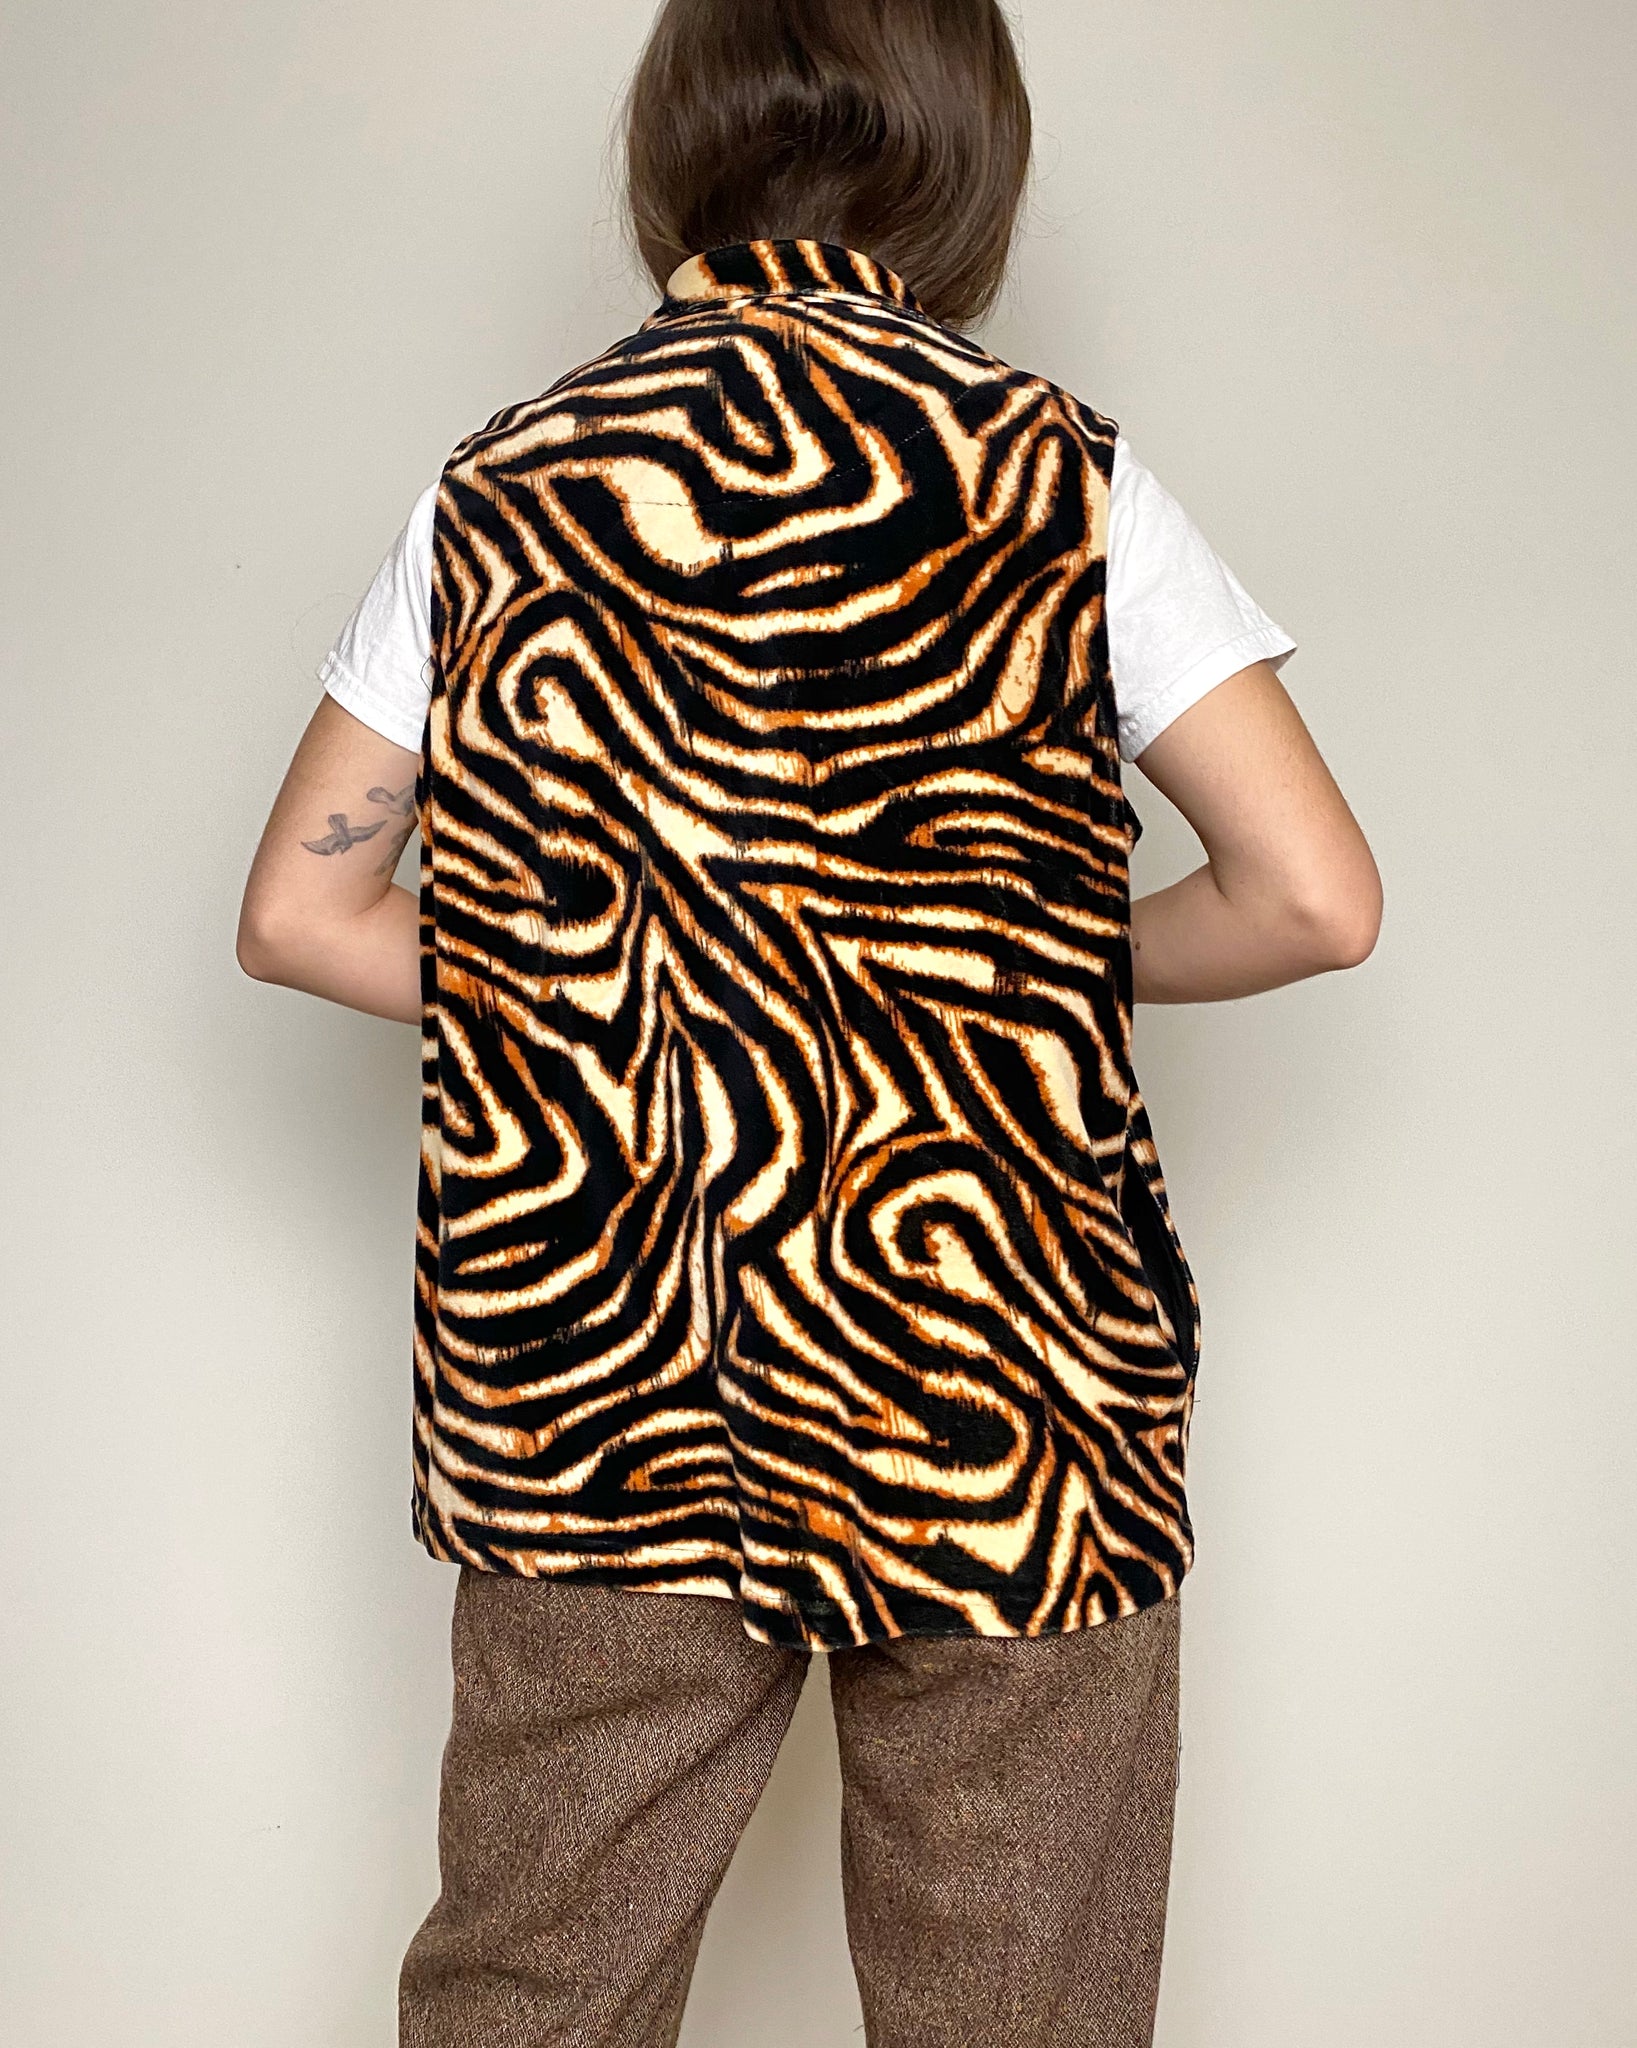 2000s Zebra Fleece Vest (size XL)